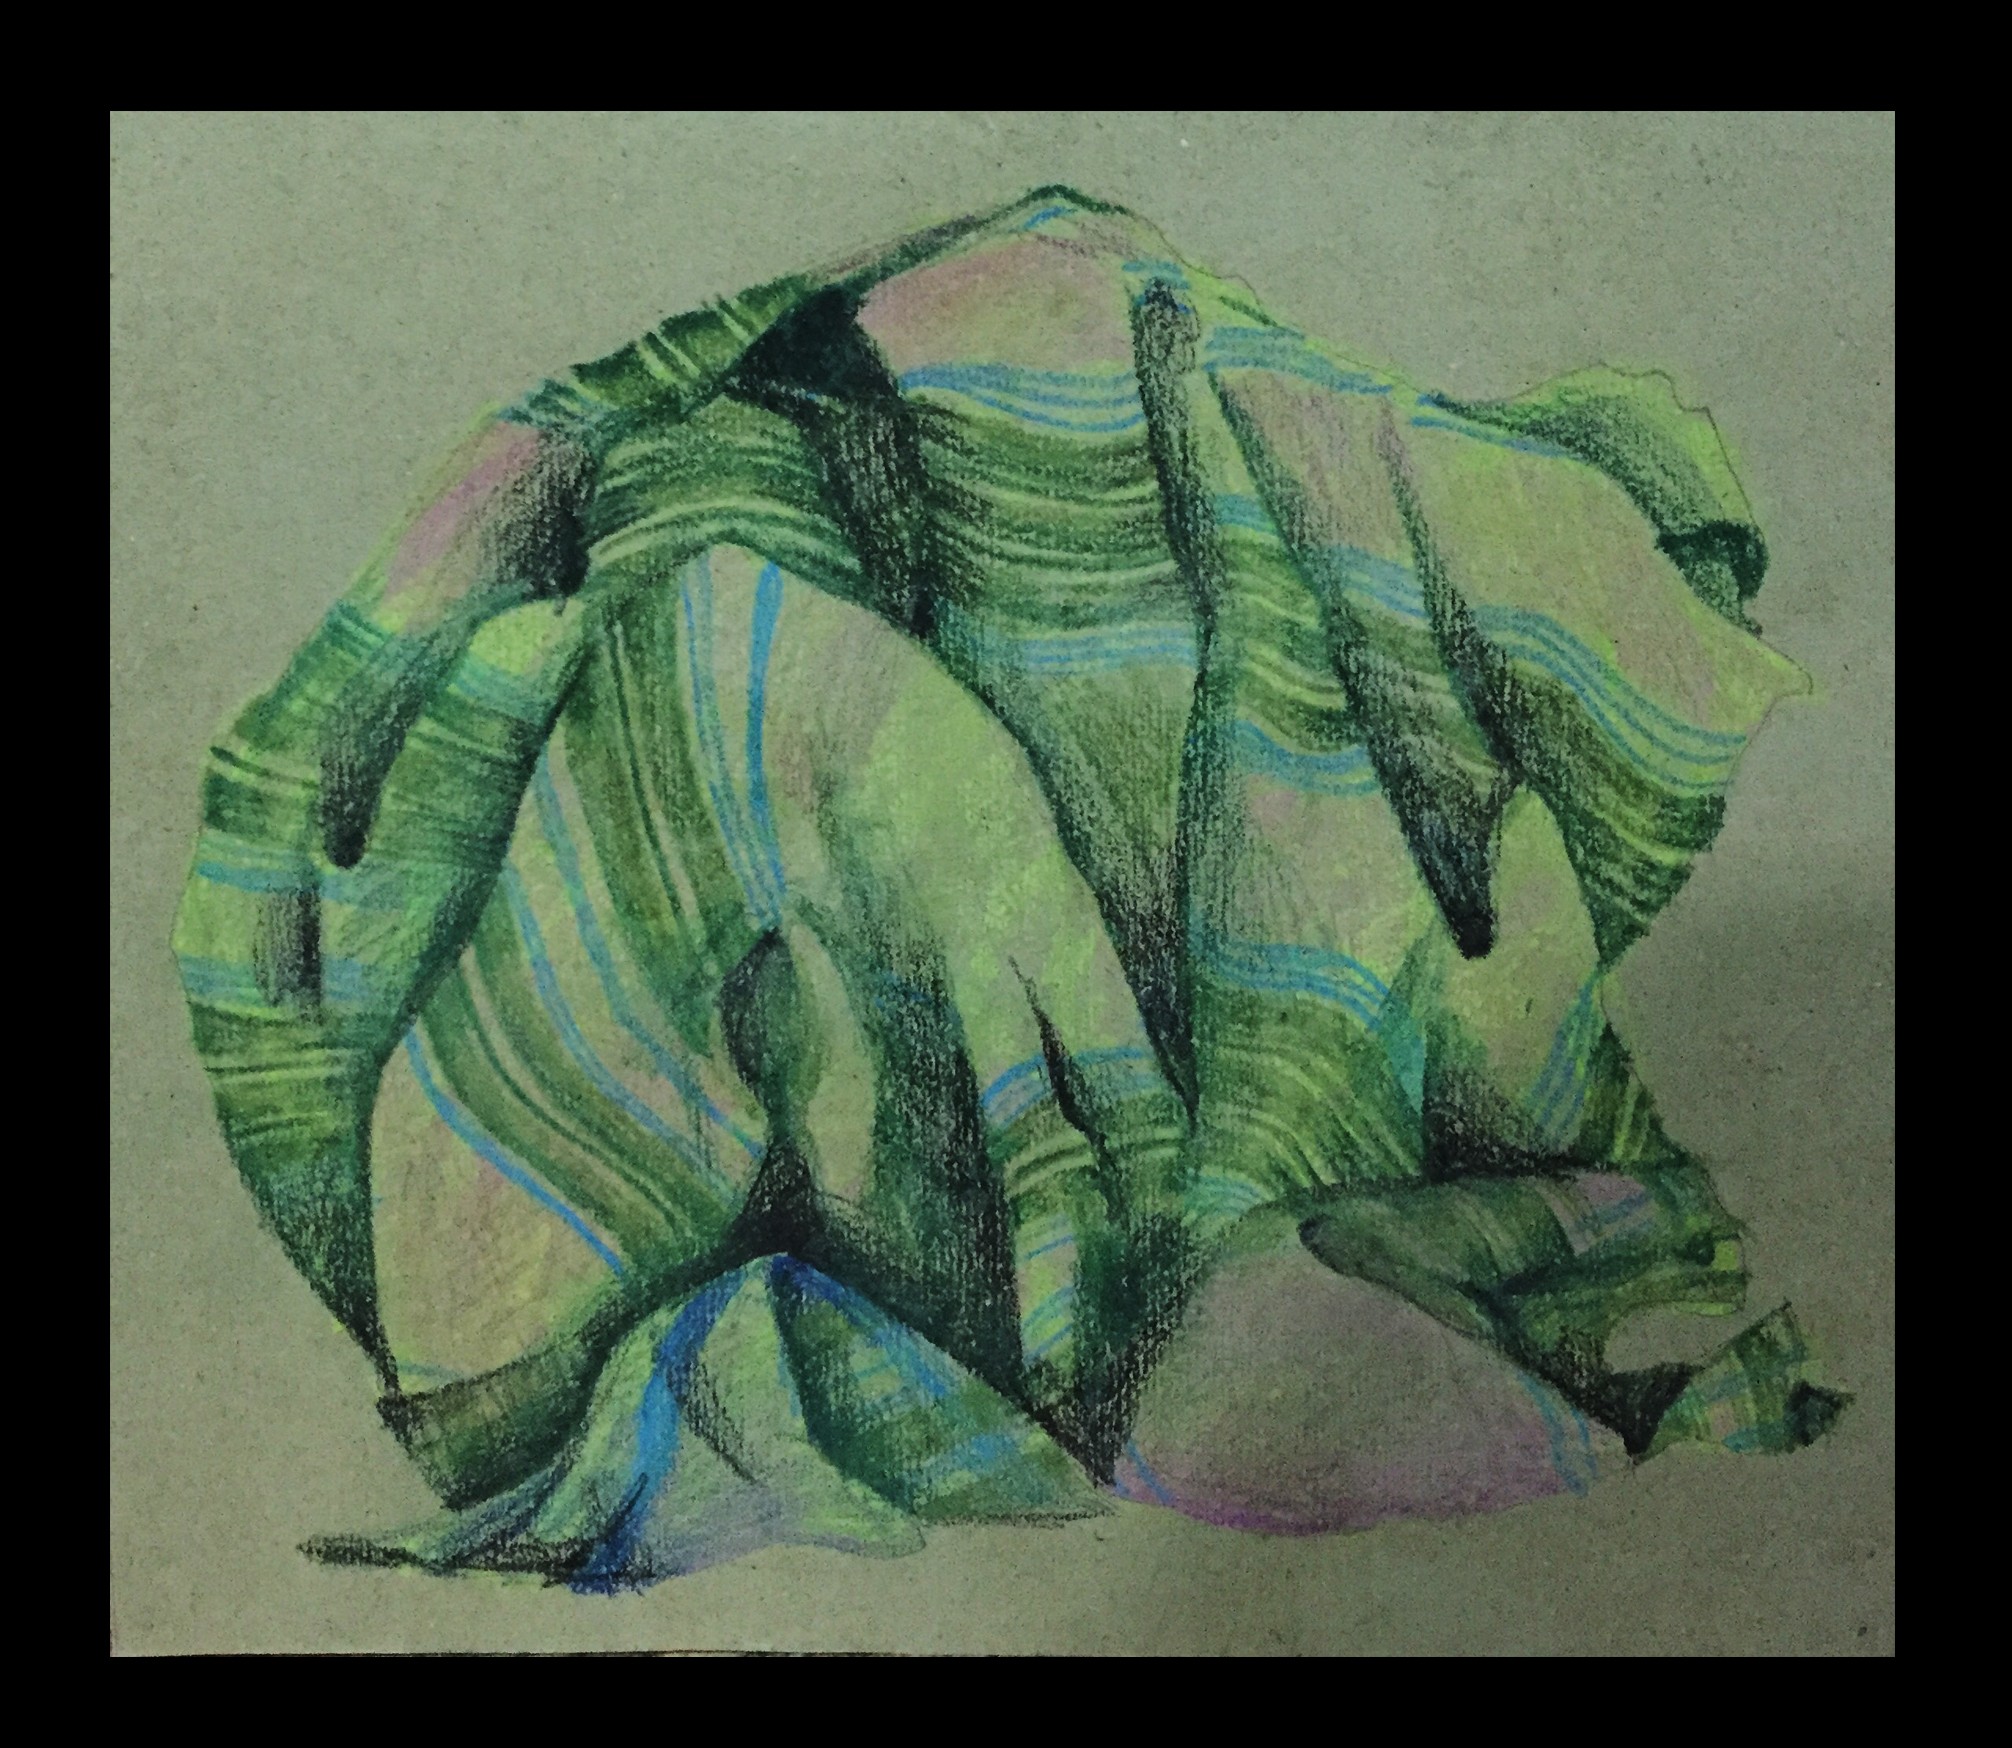 Rhythm of a fabric piece by Chathurika Kalupahana